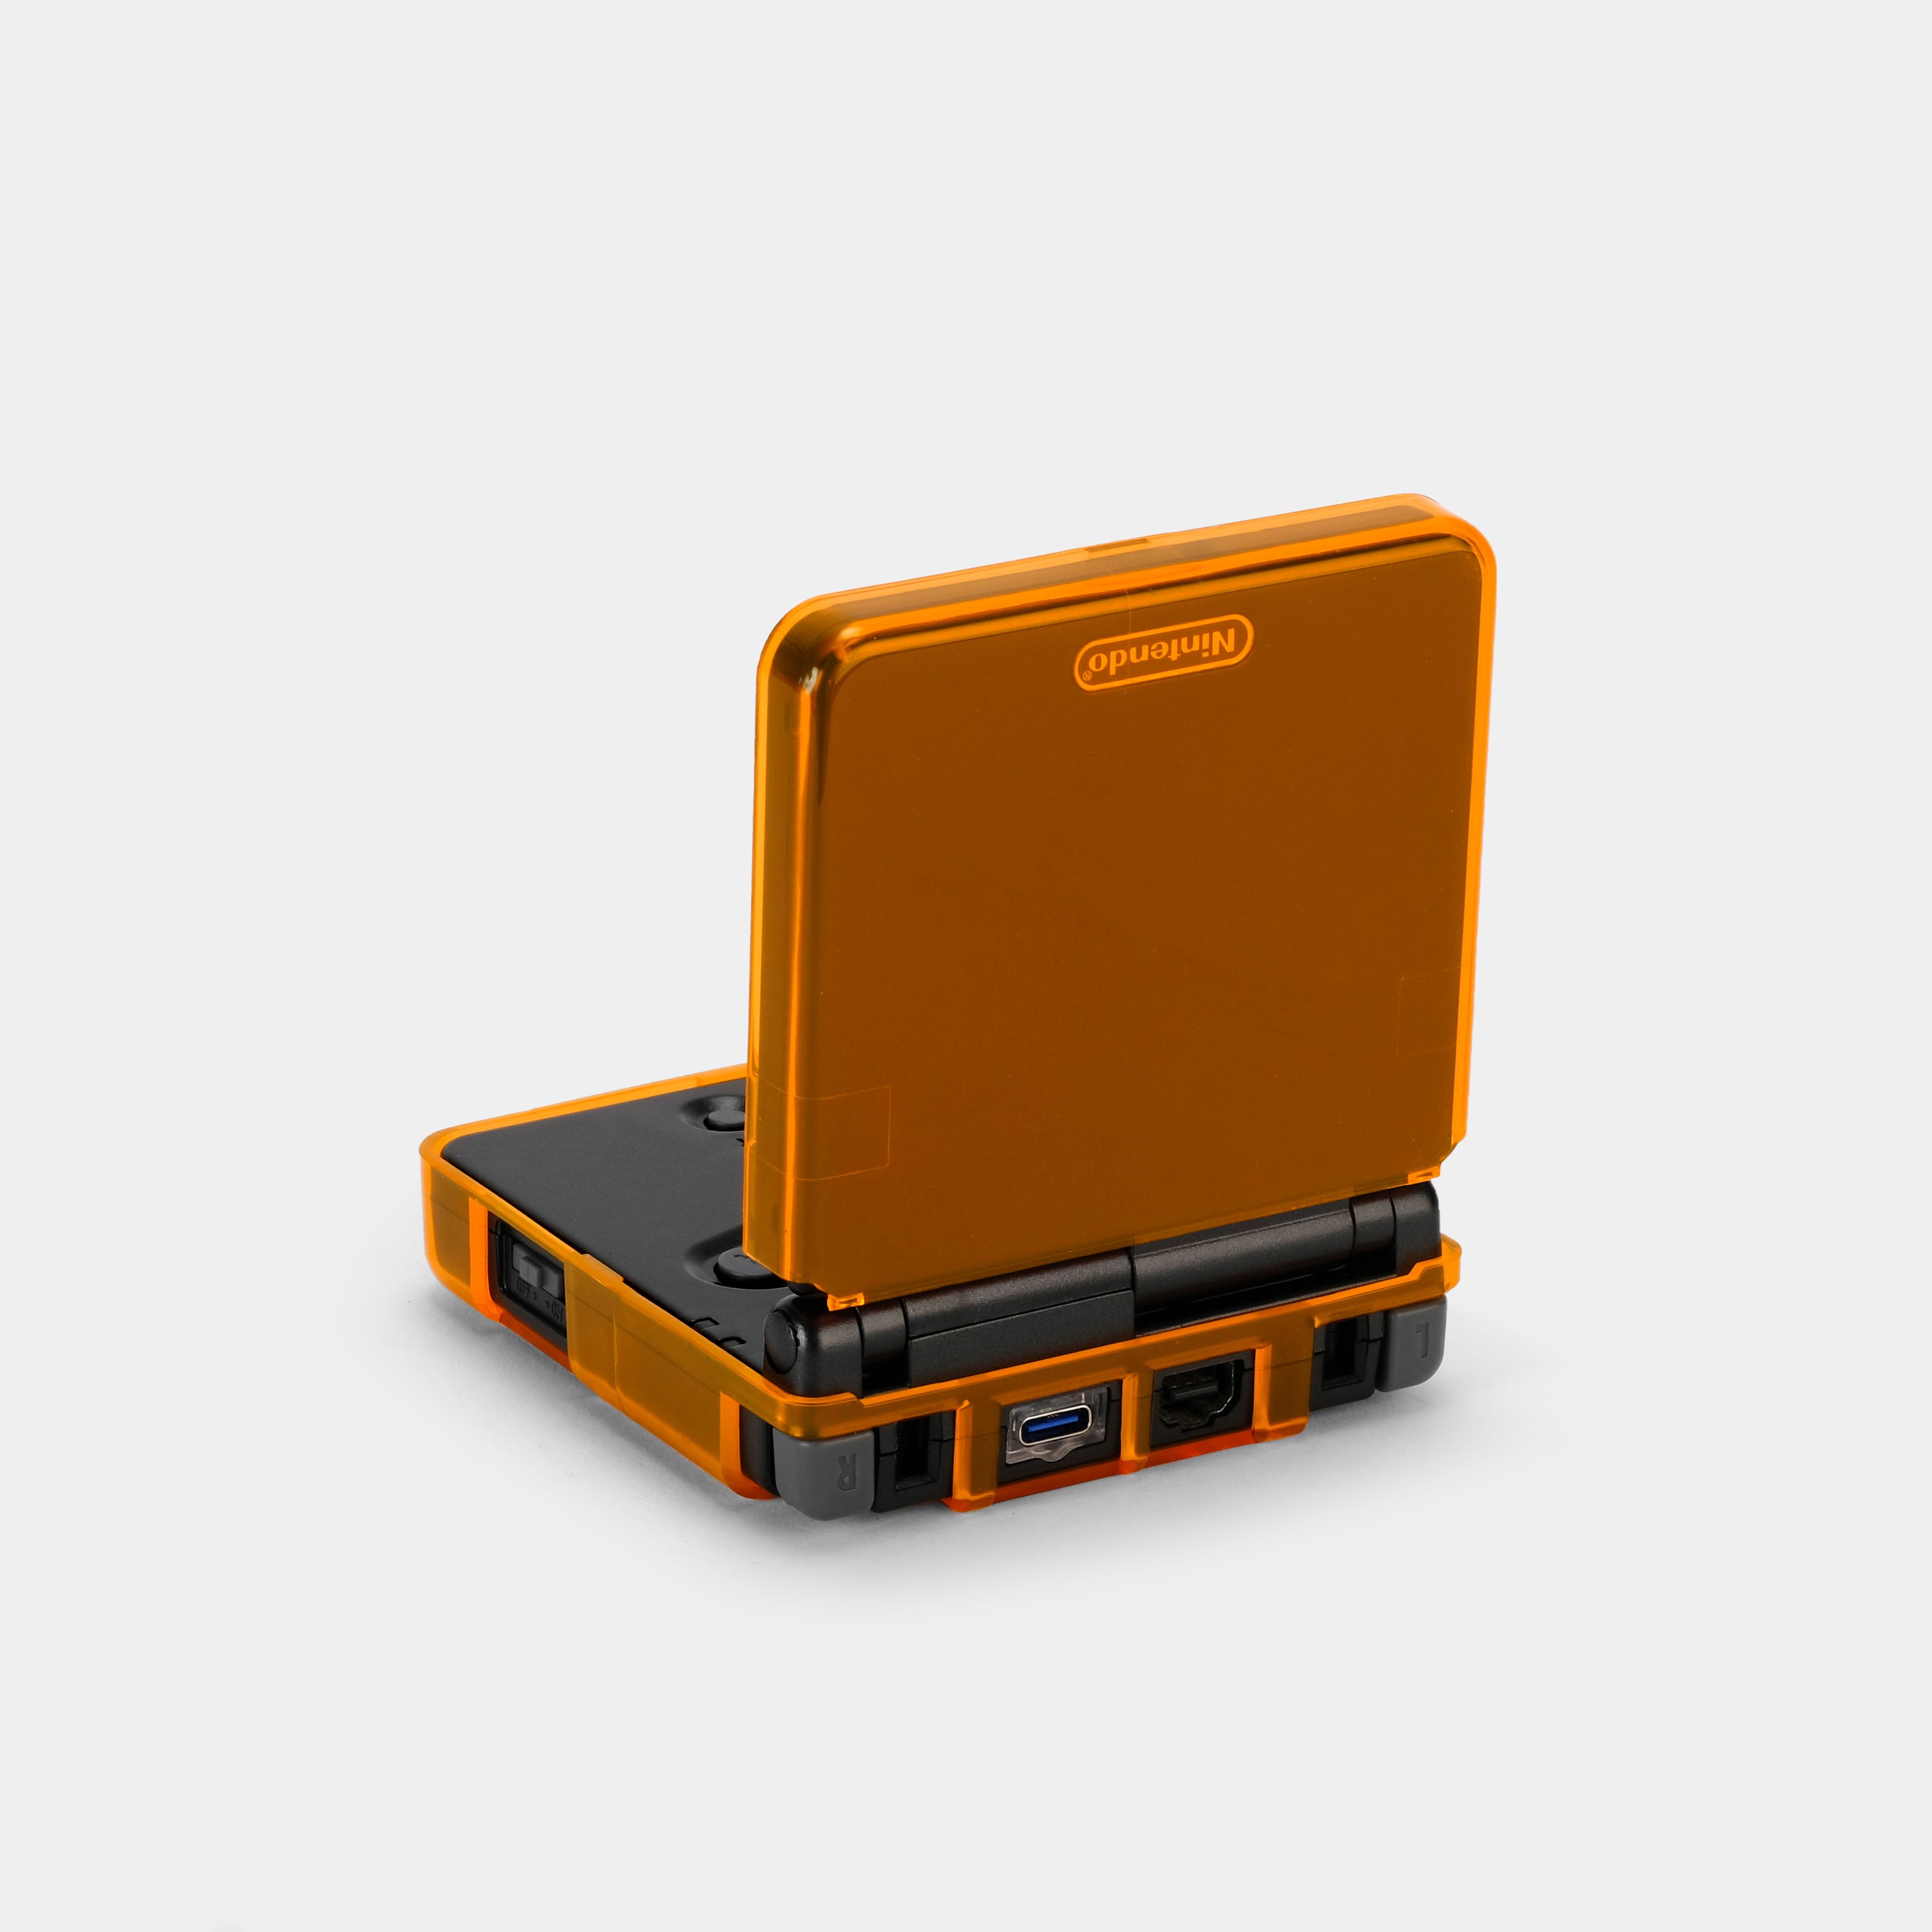 Game Boy Advance SP Transparent Orange Protective Case